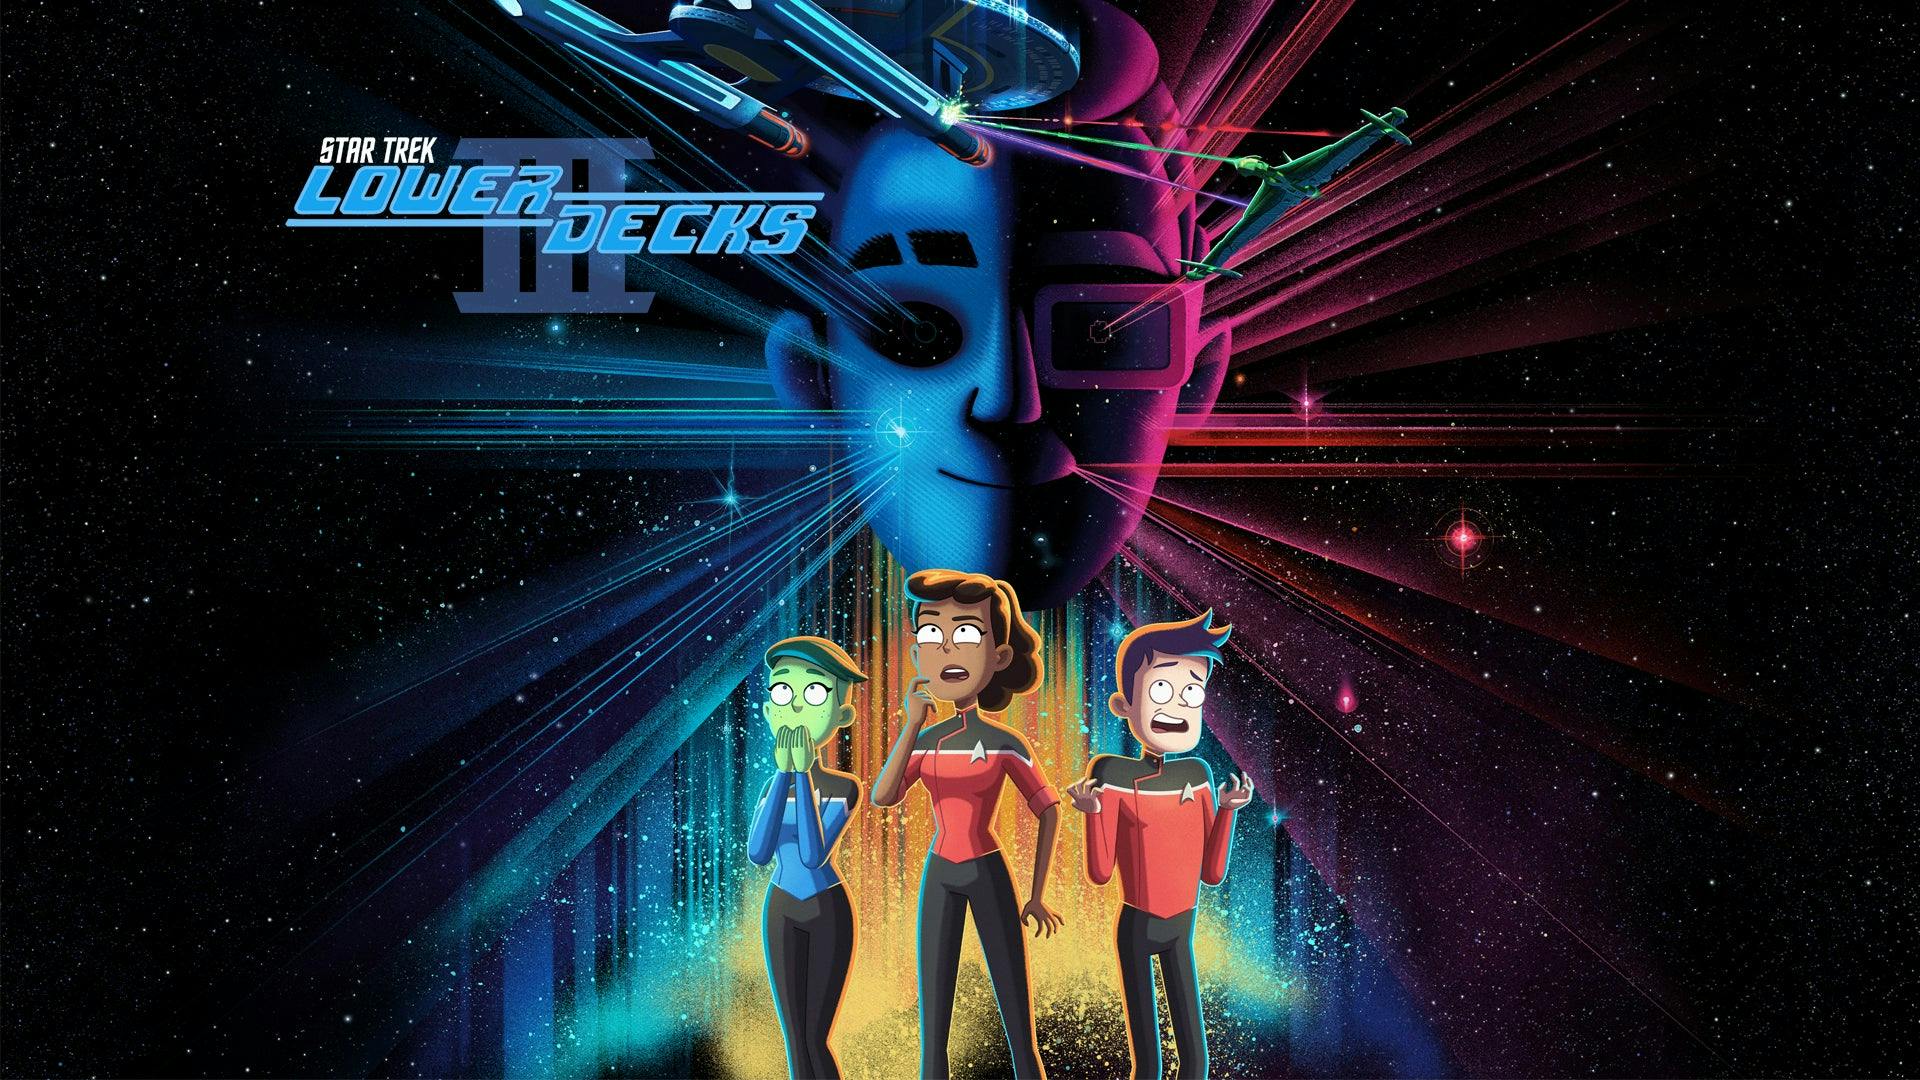 Star Trek: Lower Decks Returns with Third Season on August 25